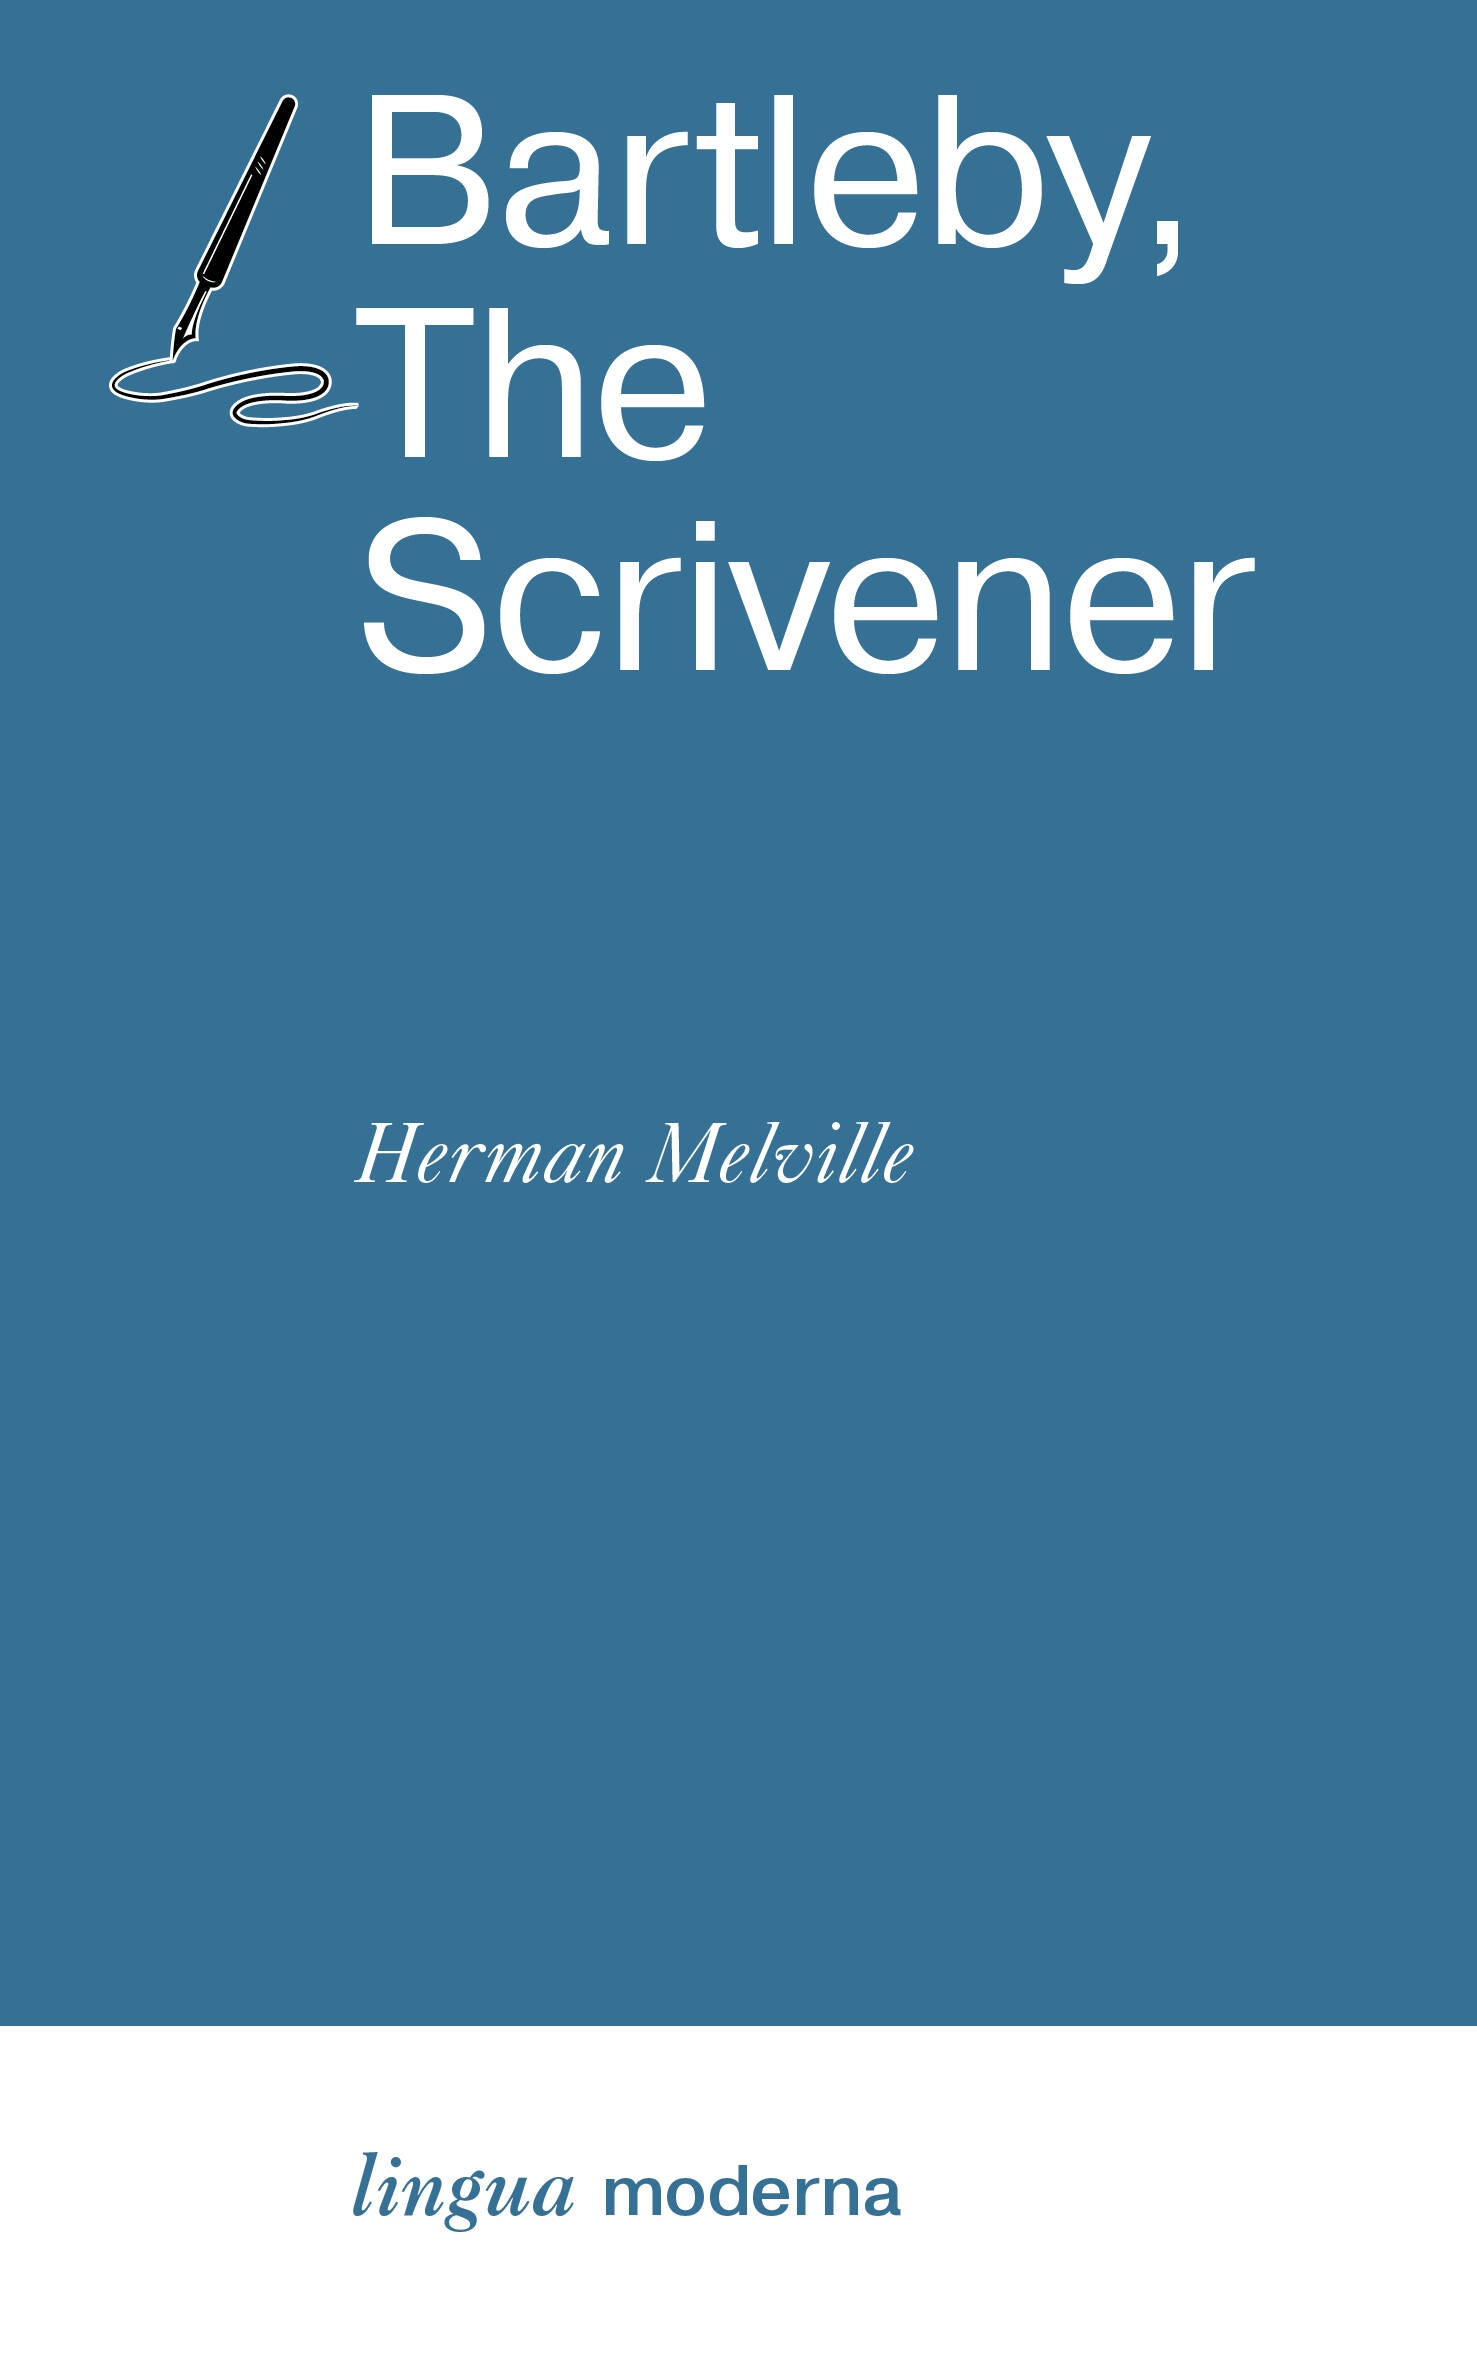 Book “Bartleby, The Scrivener” by Герман Мелвилл — 2024